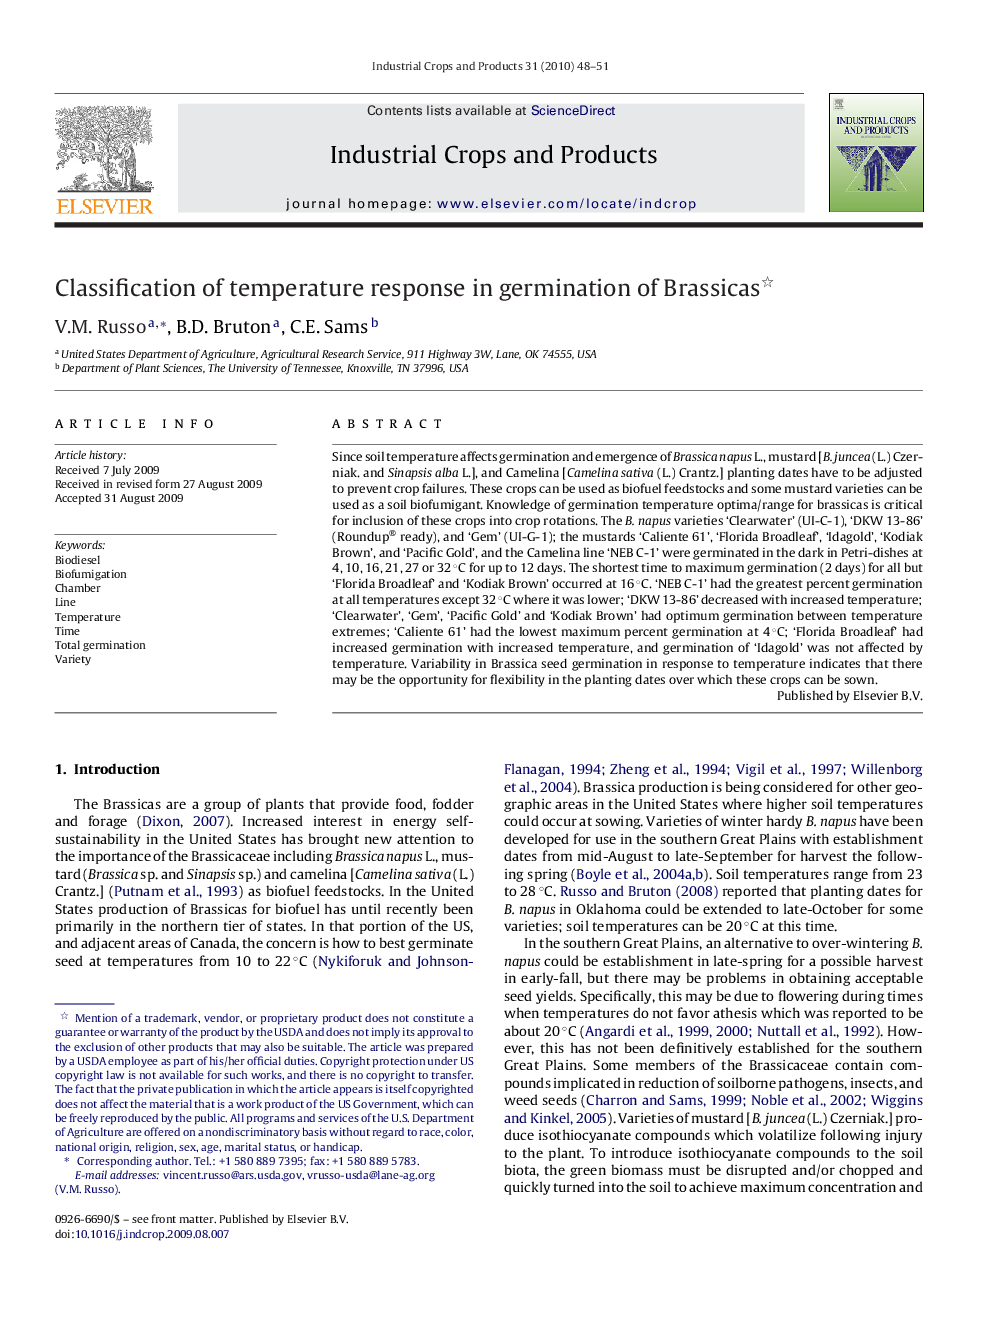 Classification of temperature response in germination of Brassicas 